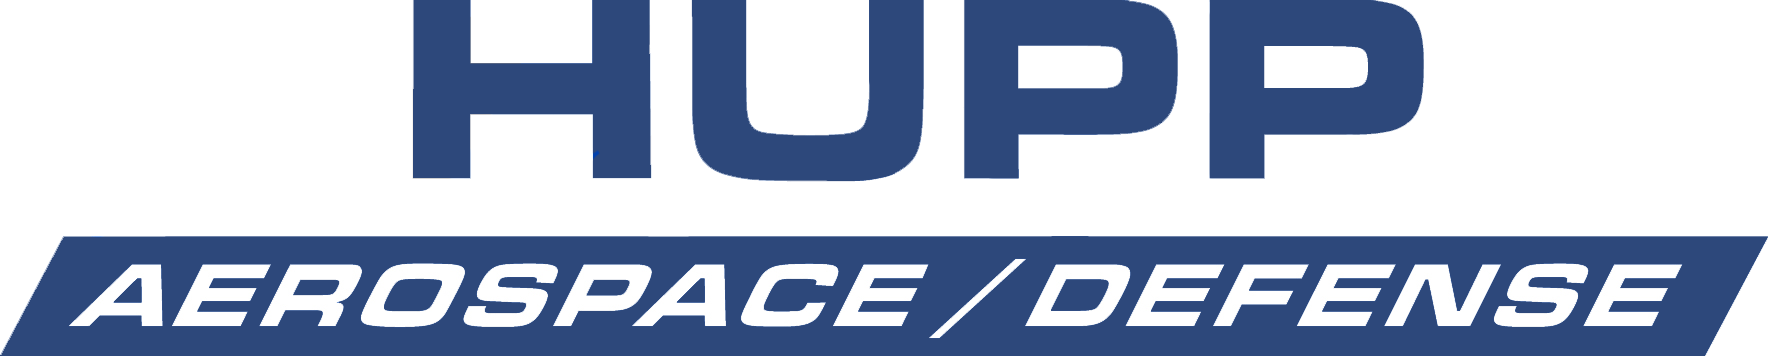 Hupp Aerospace / Defense